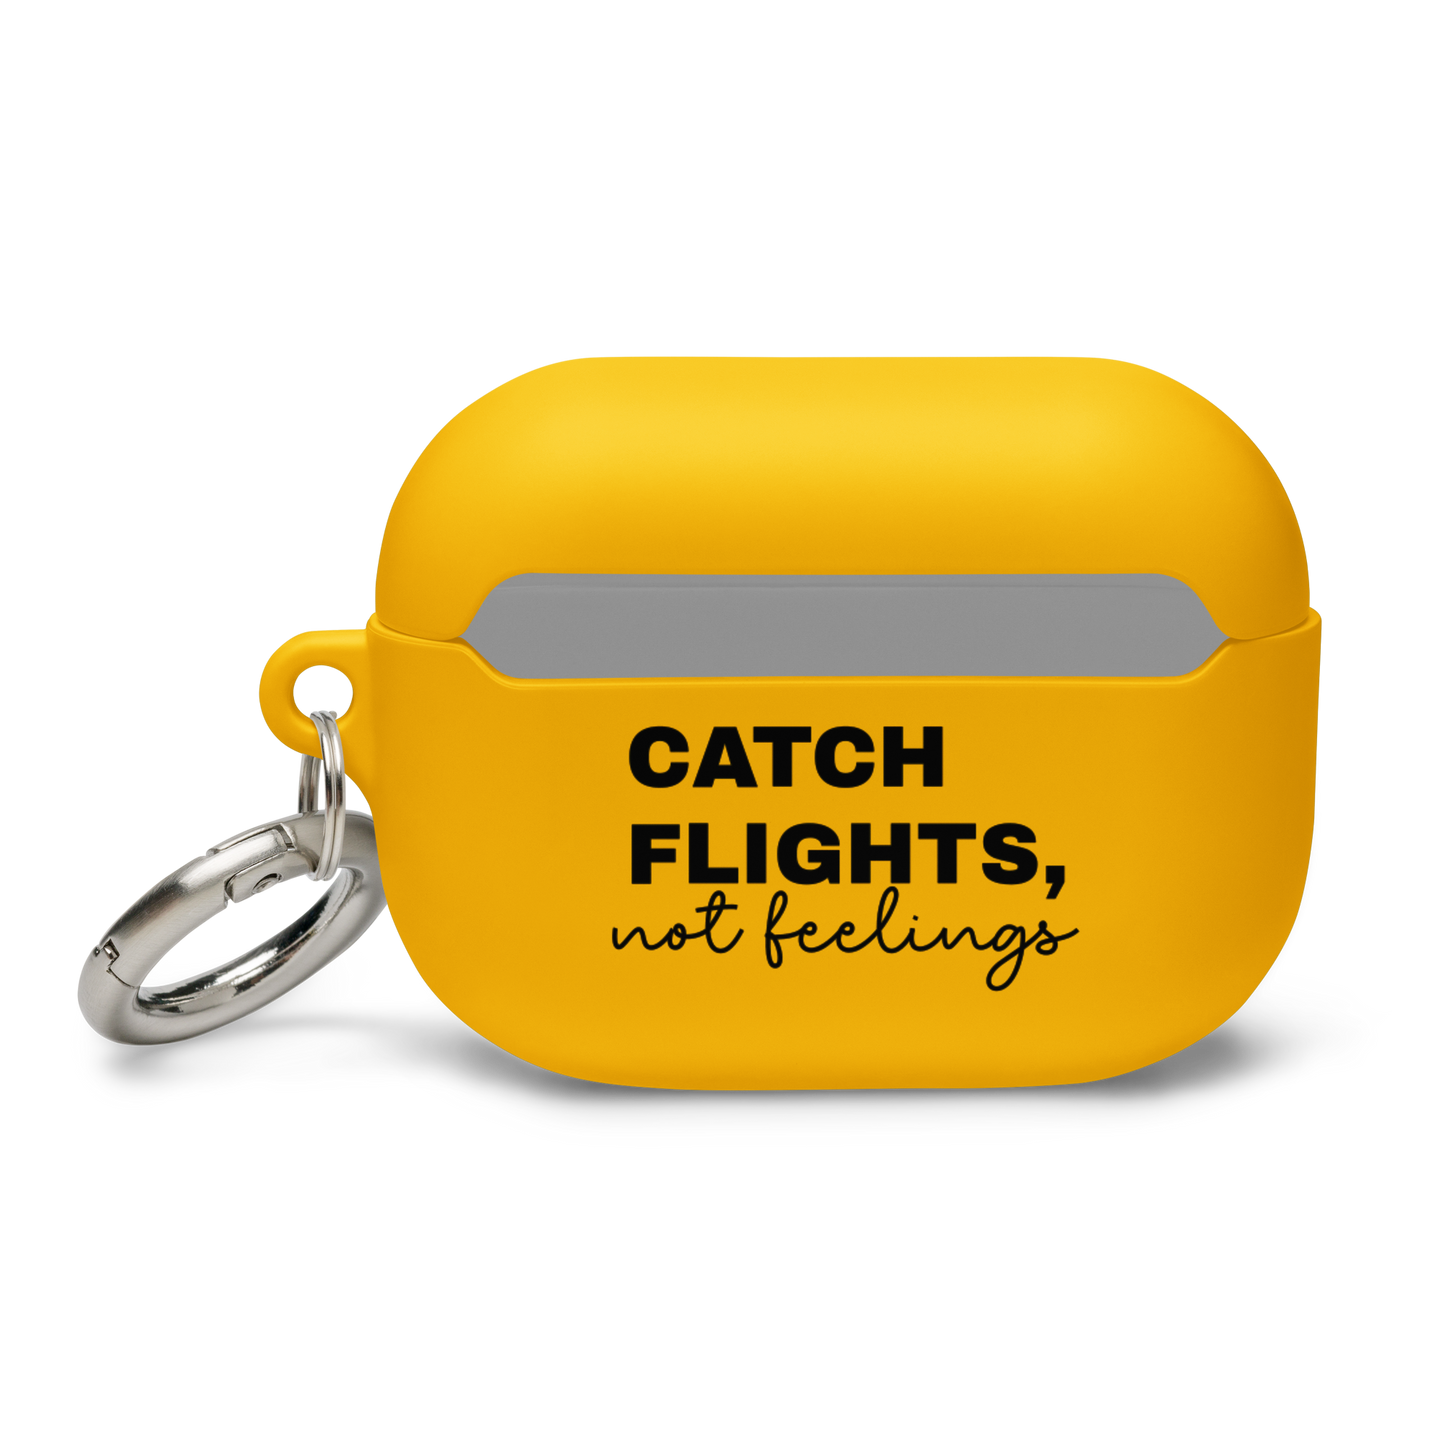 "Catch flights, not feelings" AirPods® Case